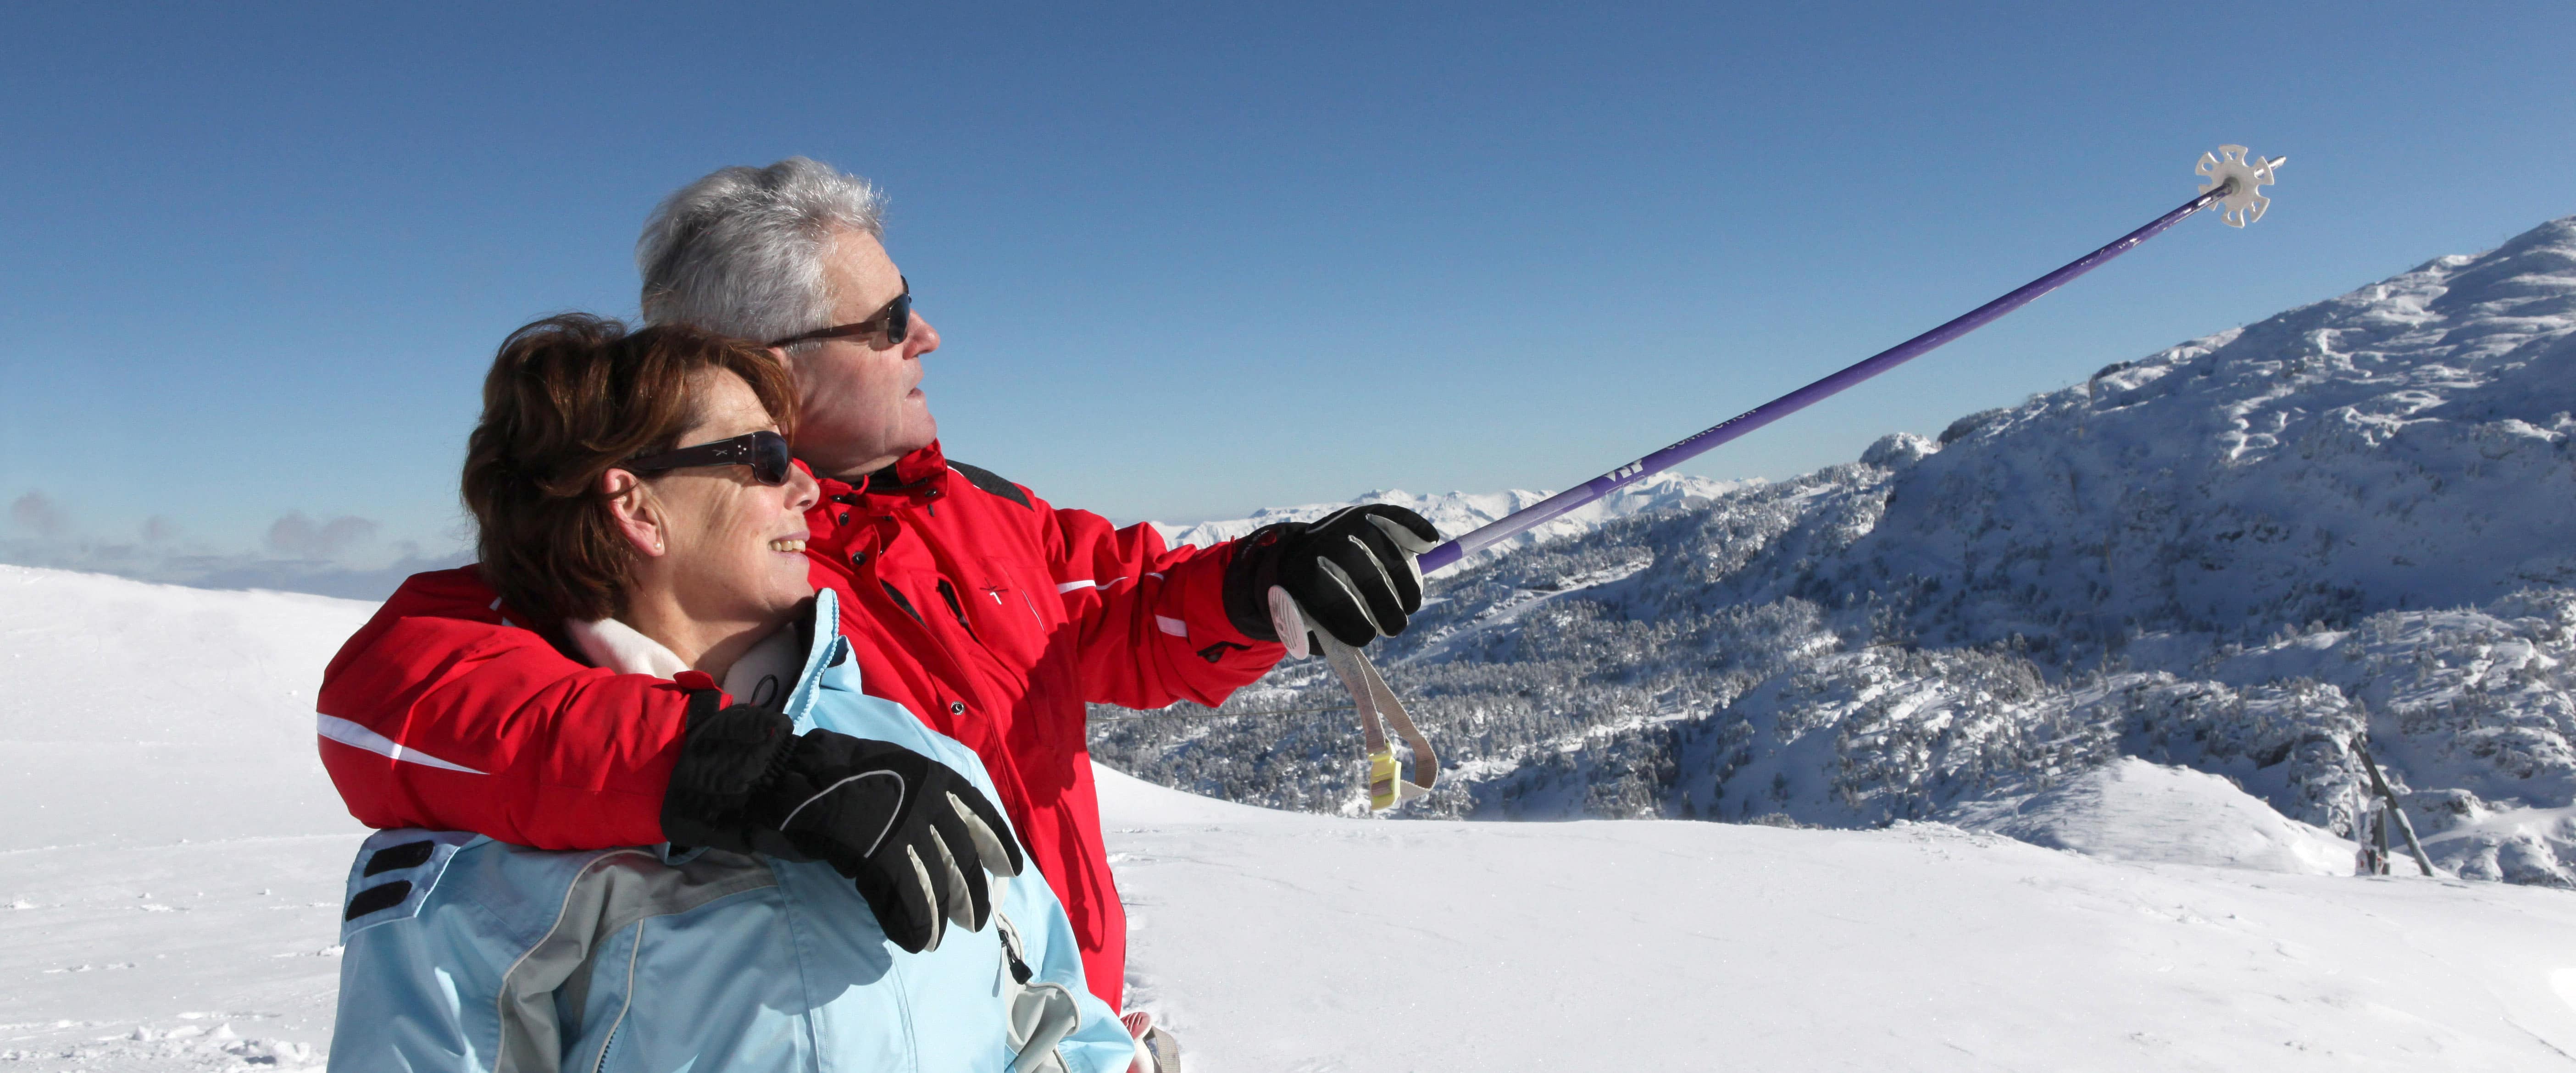 Top 10 ski holiday destinations